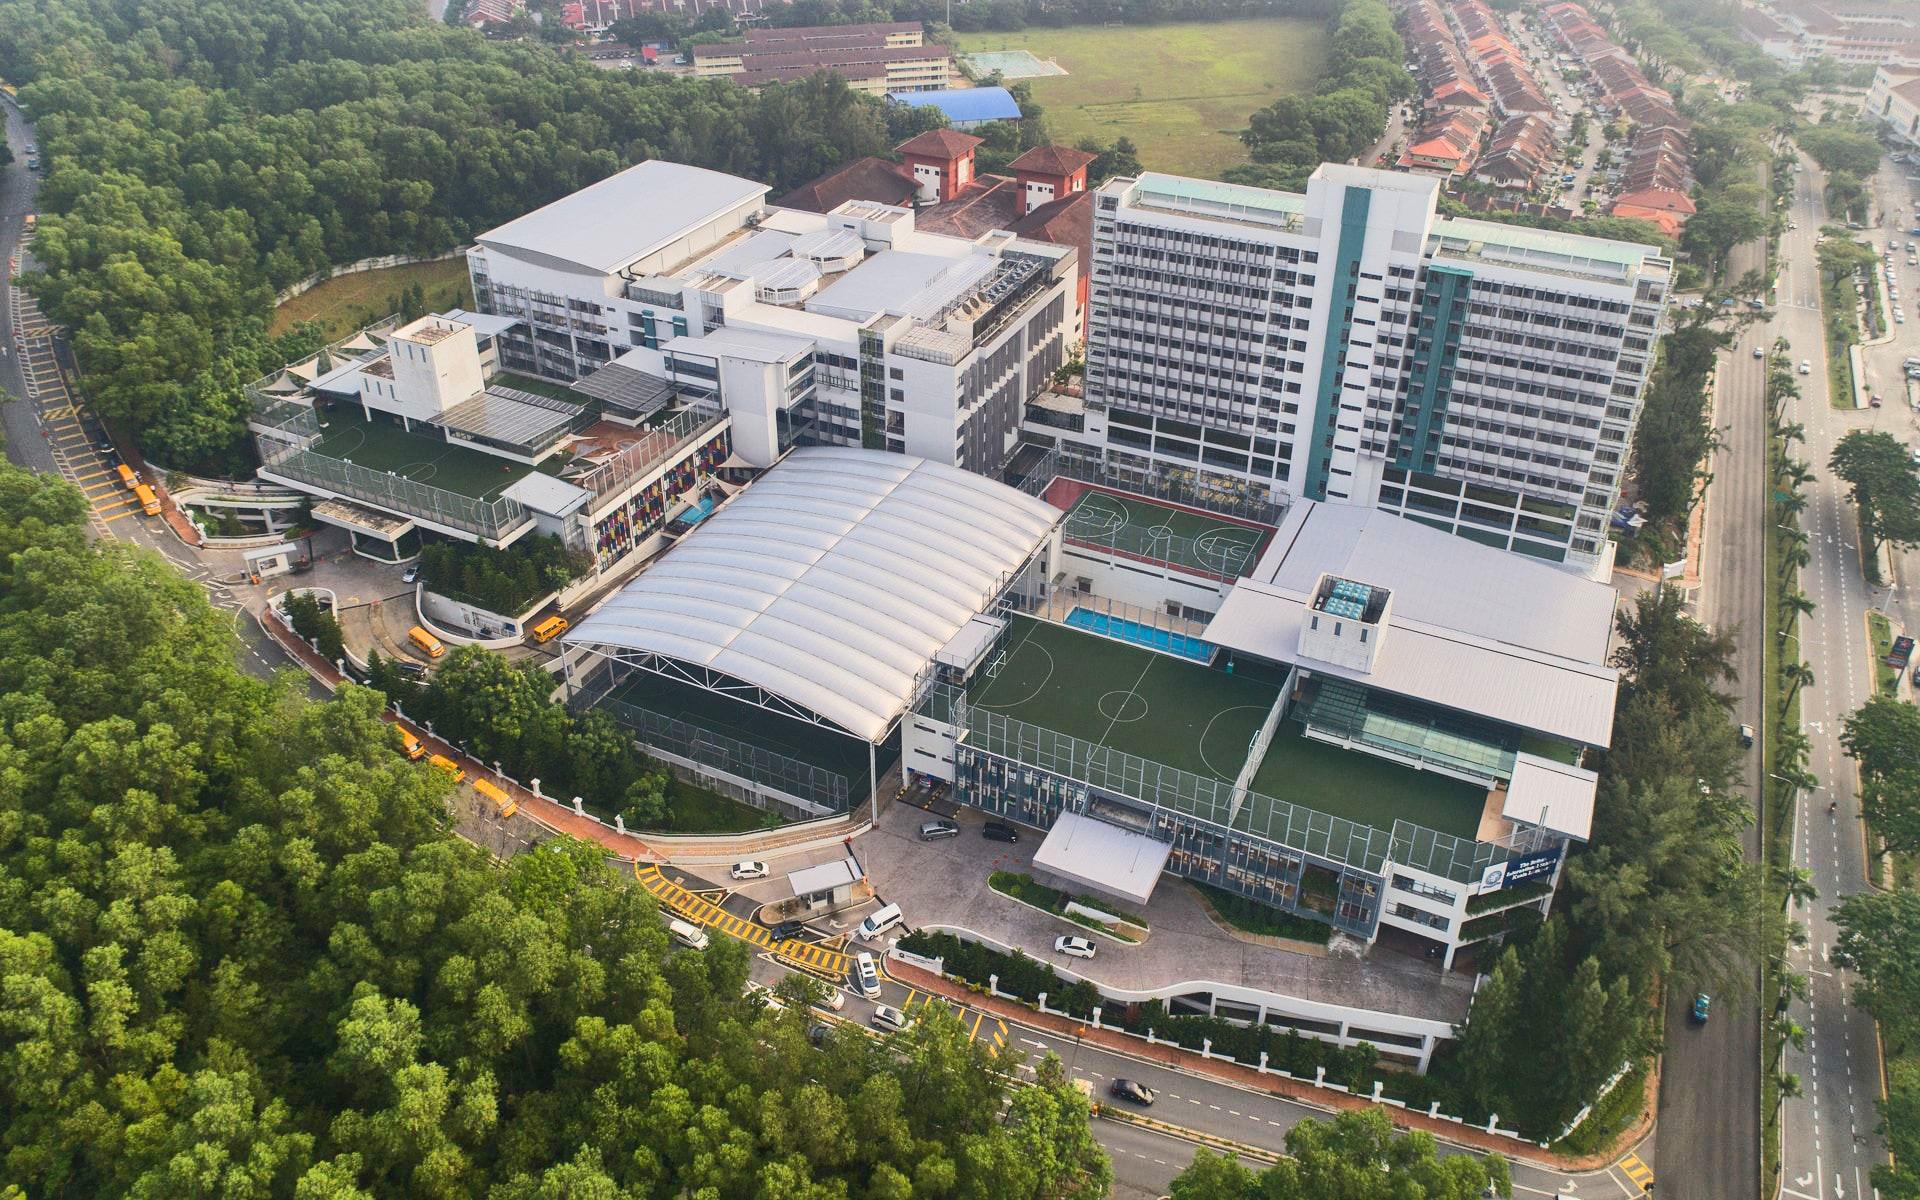 British International School Kuala Lumpur